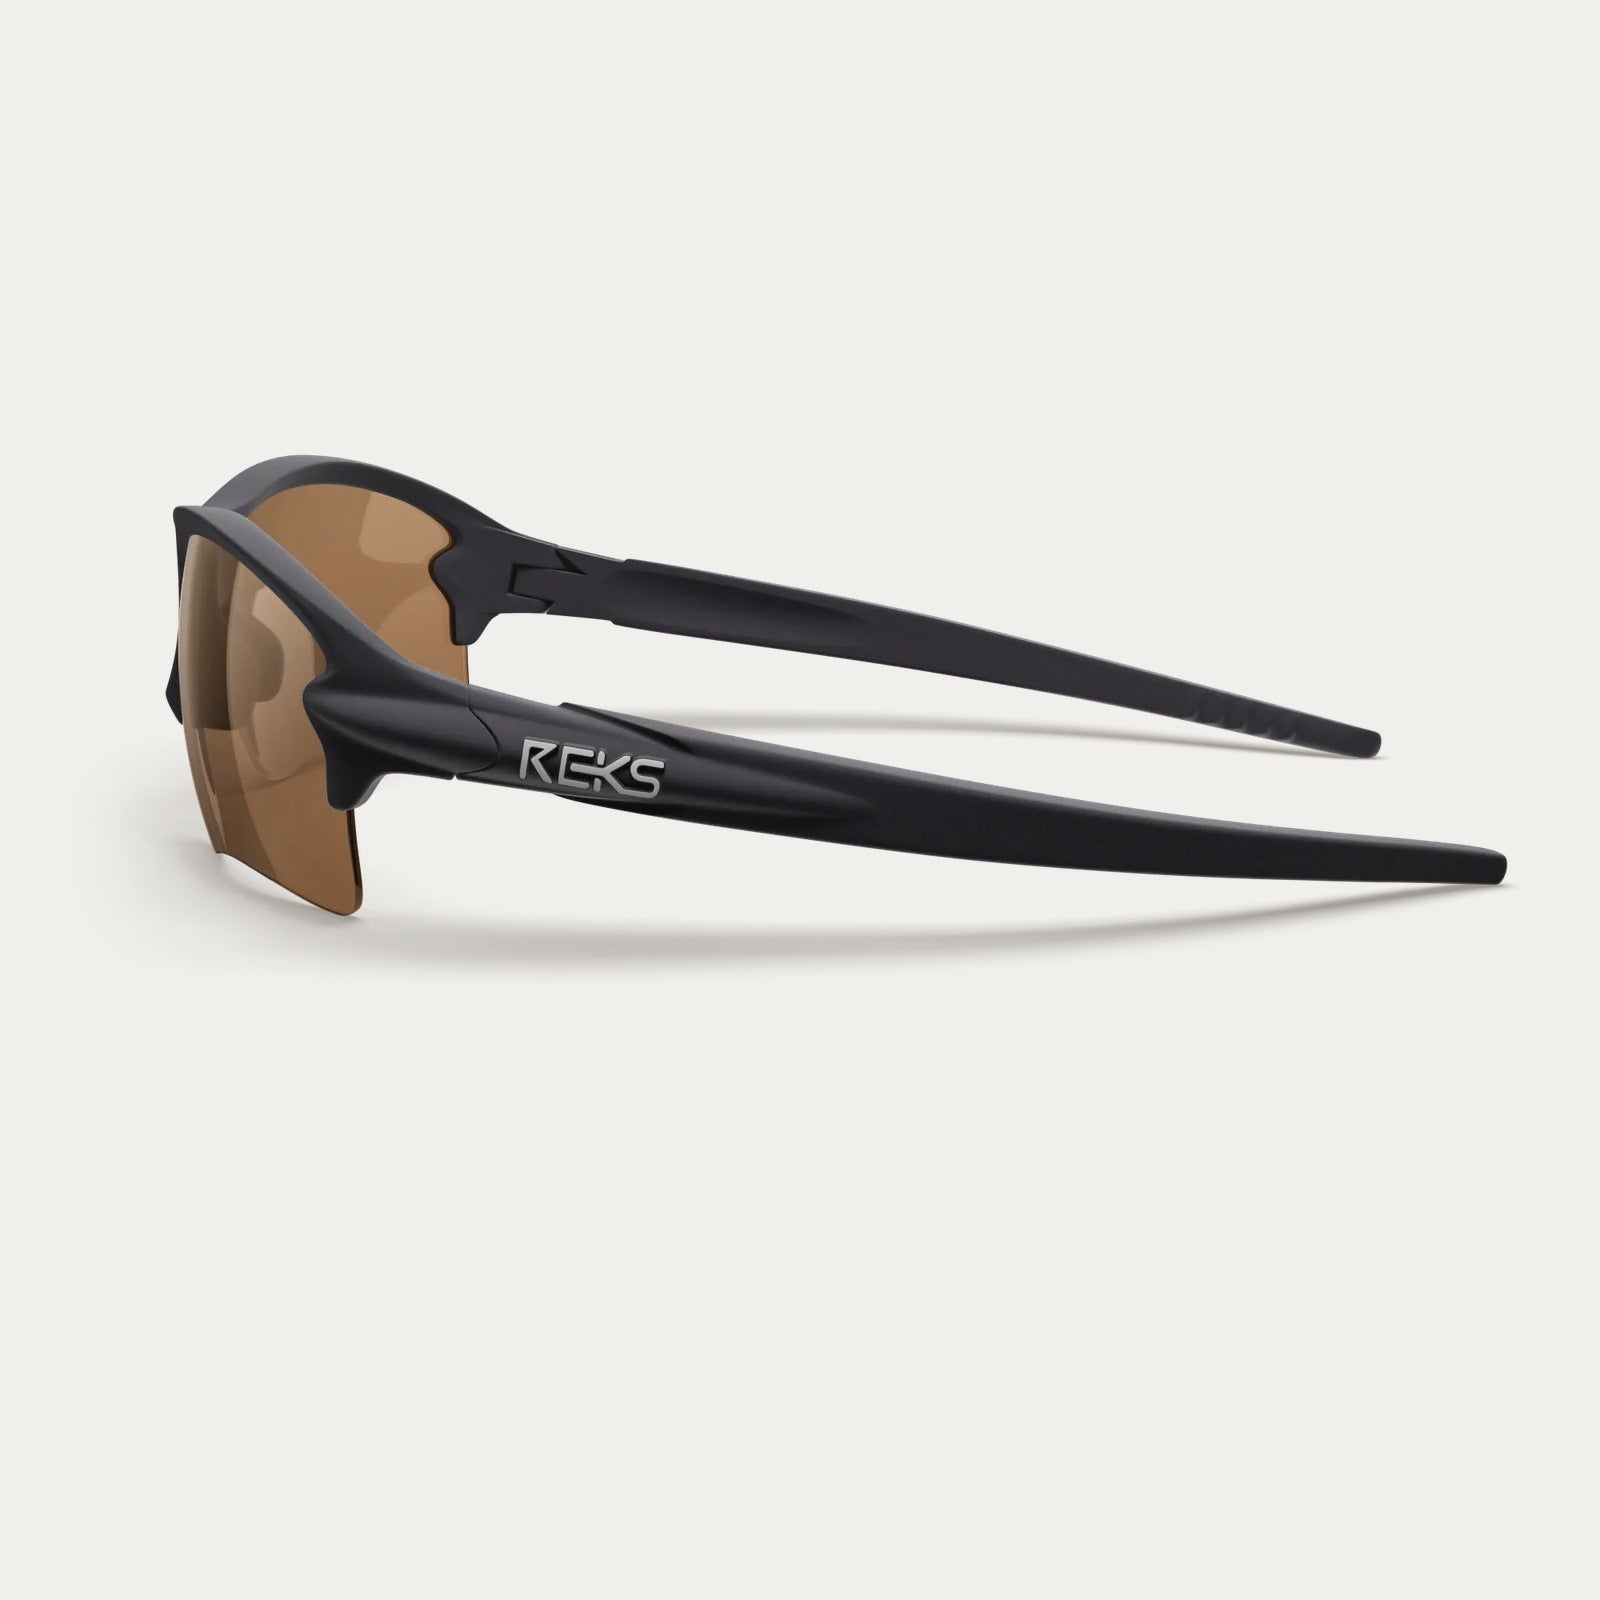 Reks | Wrap XL Trivex Color Boosting Unbreakable Sunglasses Smoke Polarized